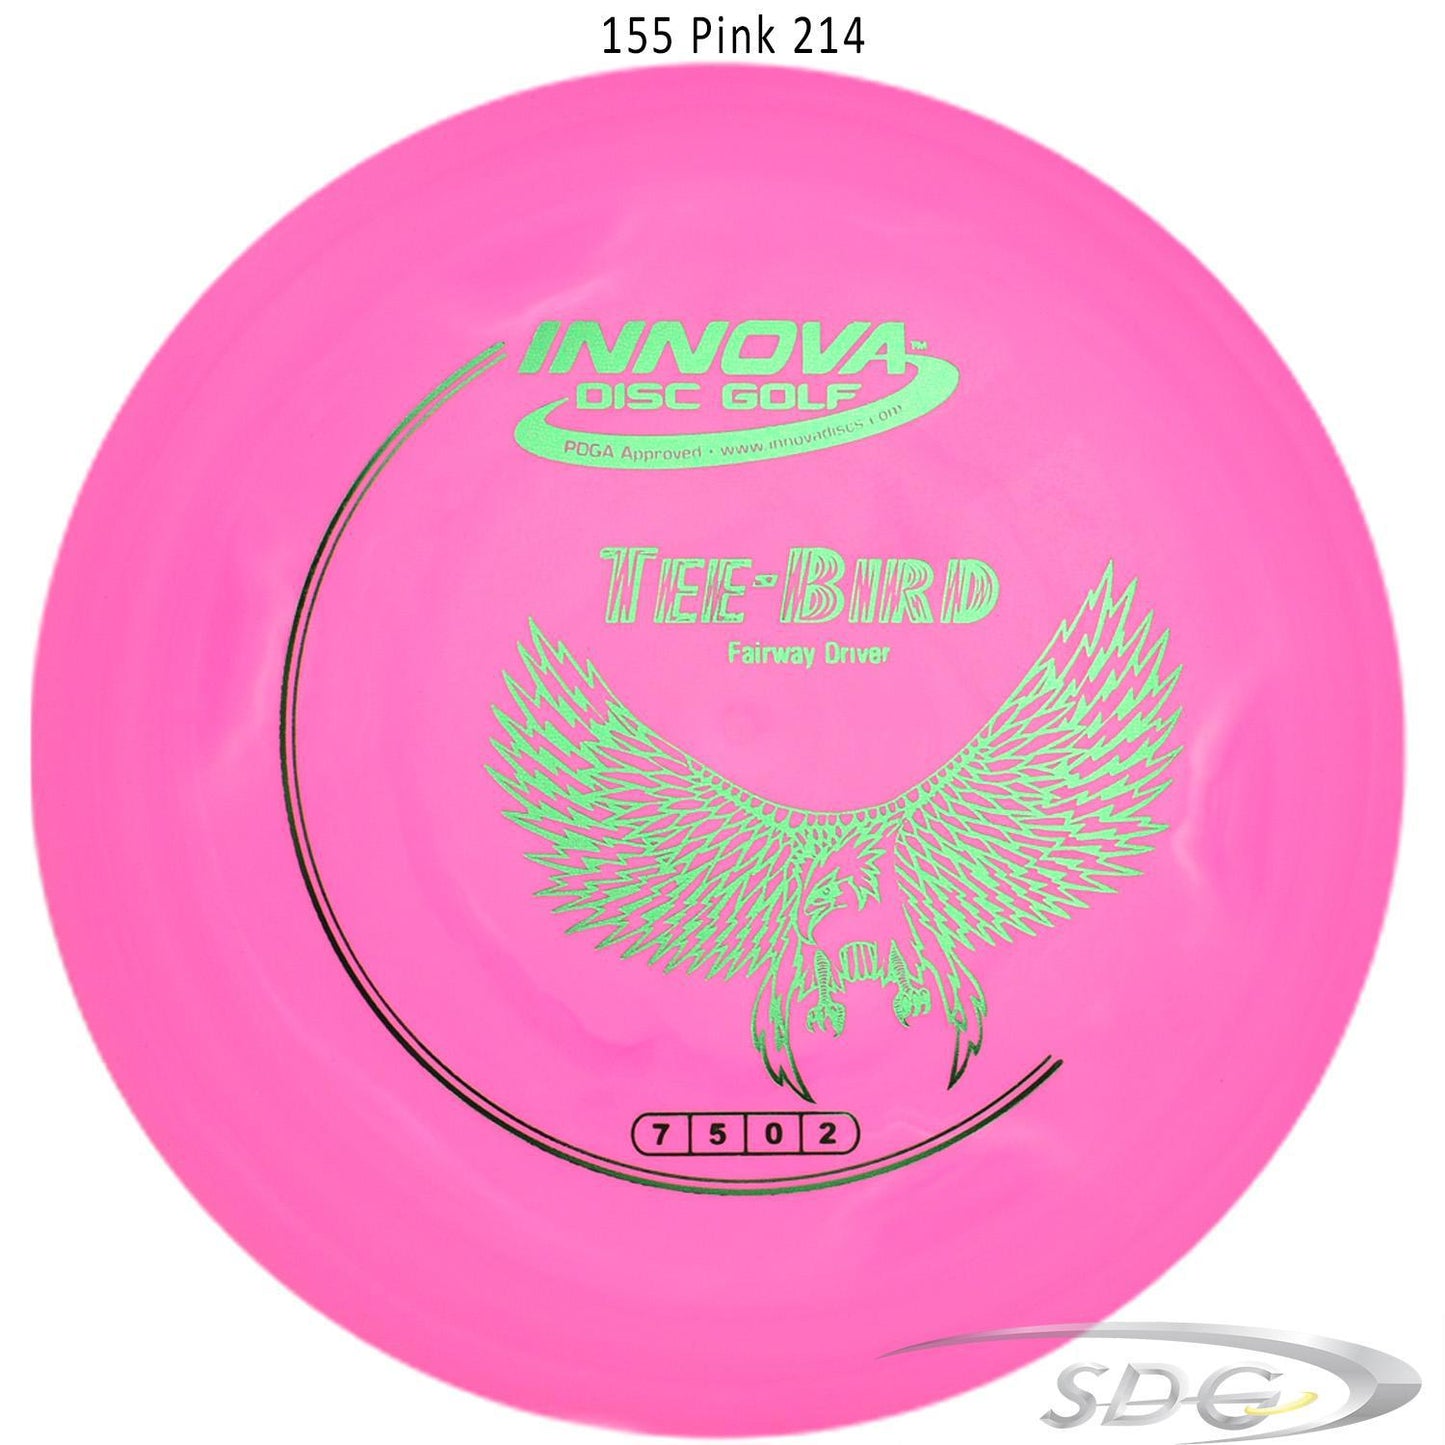 innova-dx-teebird-disc-golf-fairway-driver 155 Pink 214 